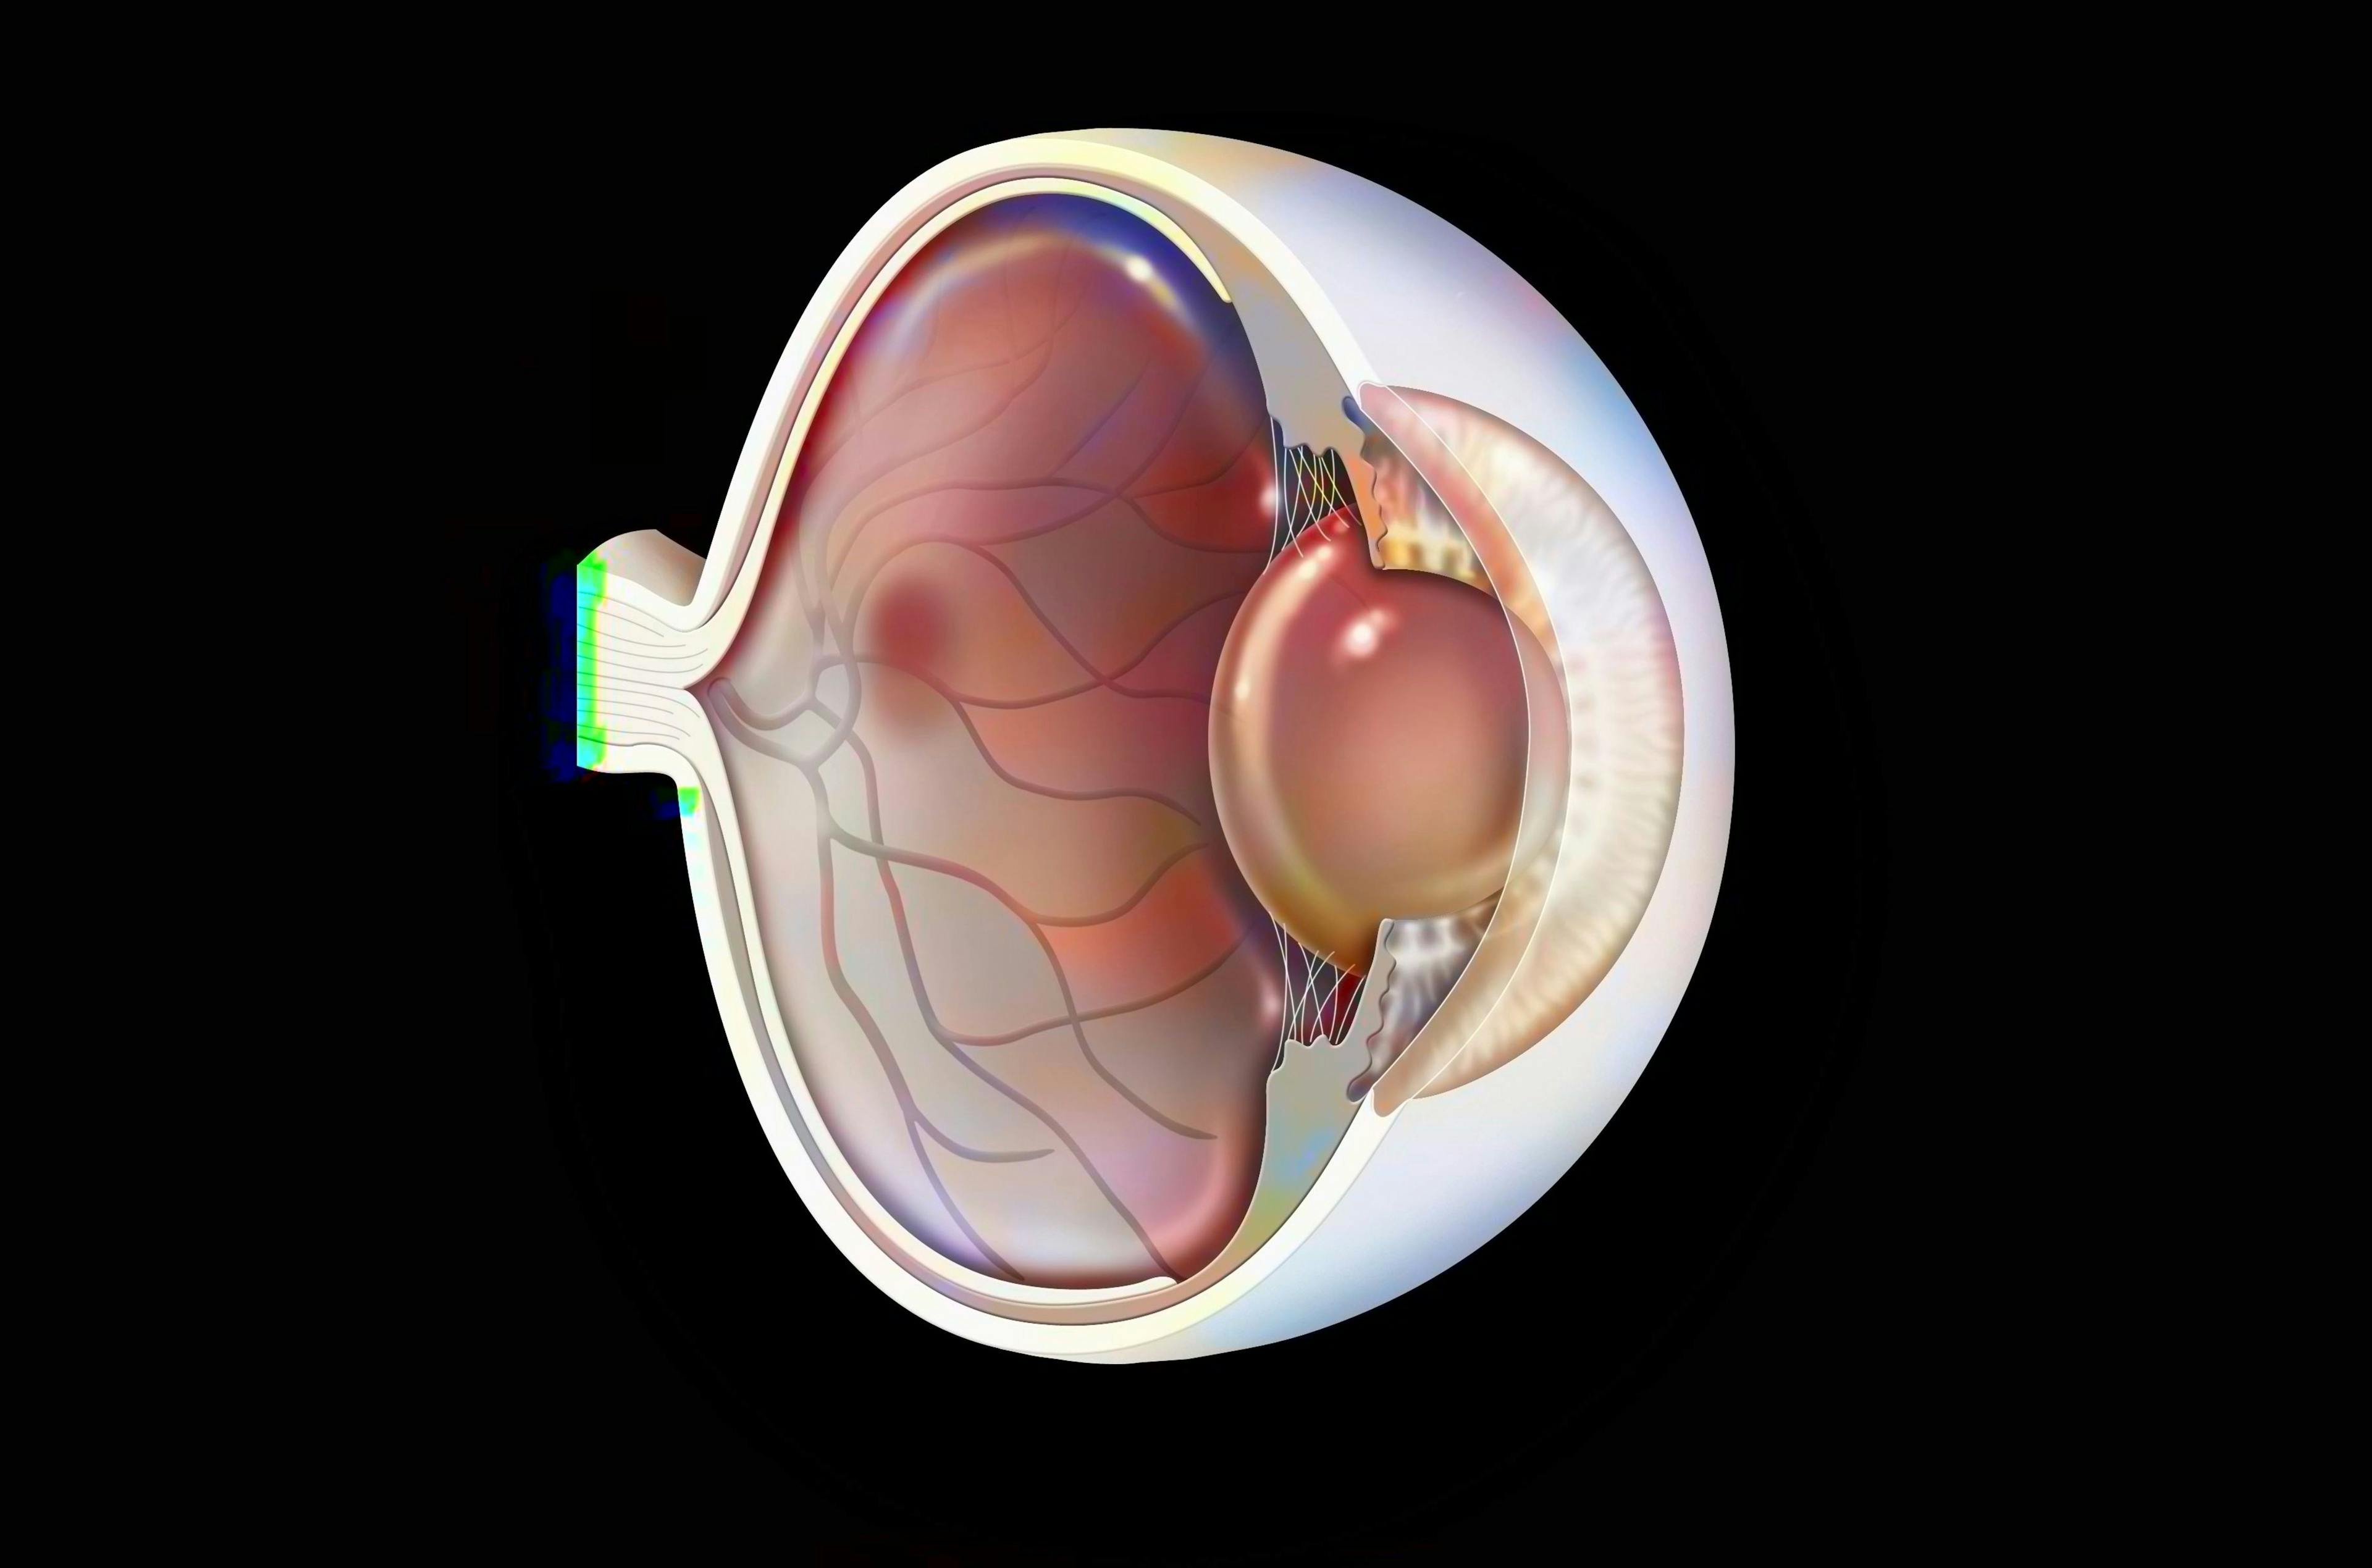 Eye with macular degeneration | Image credit: RFBSIP